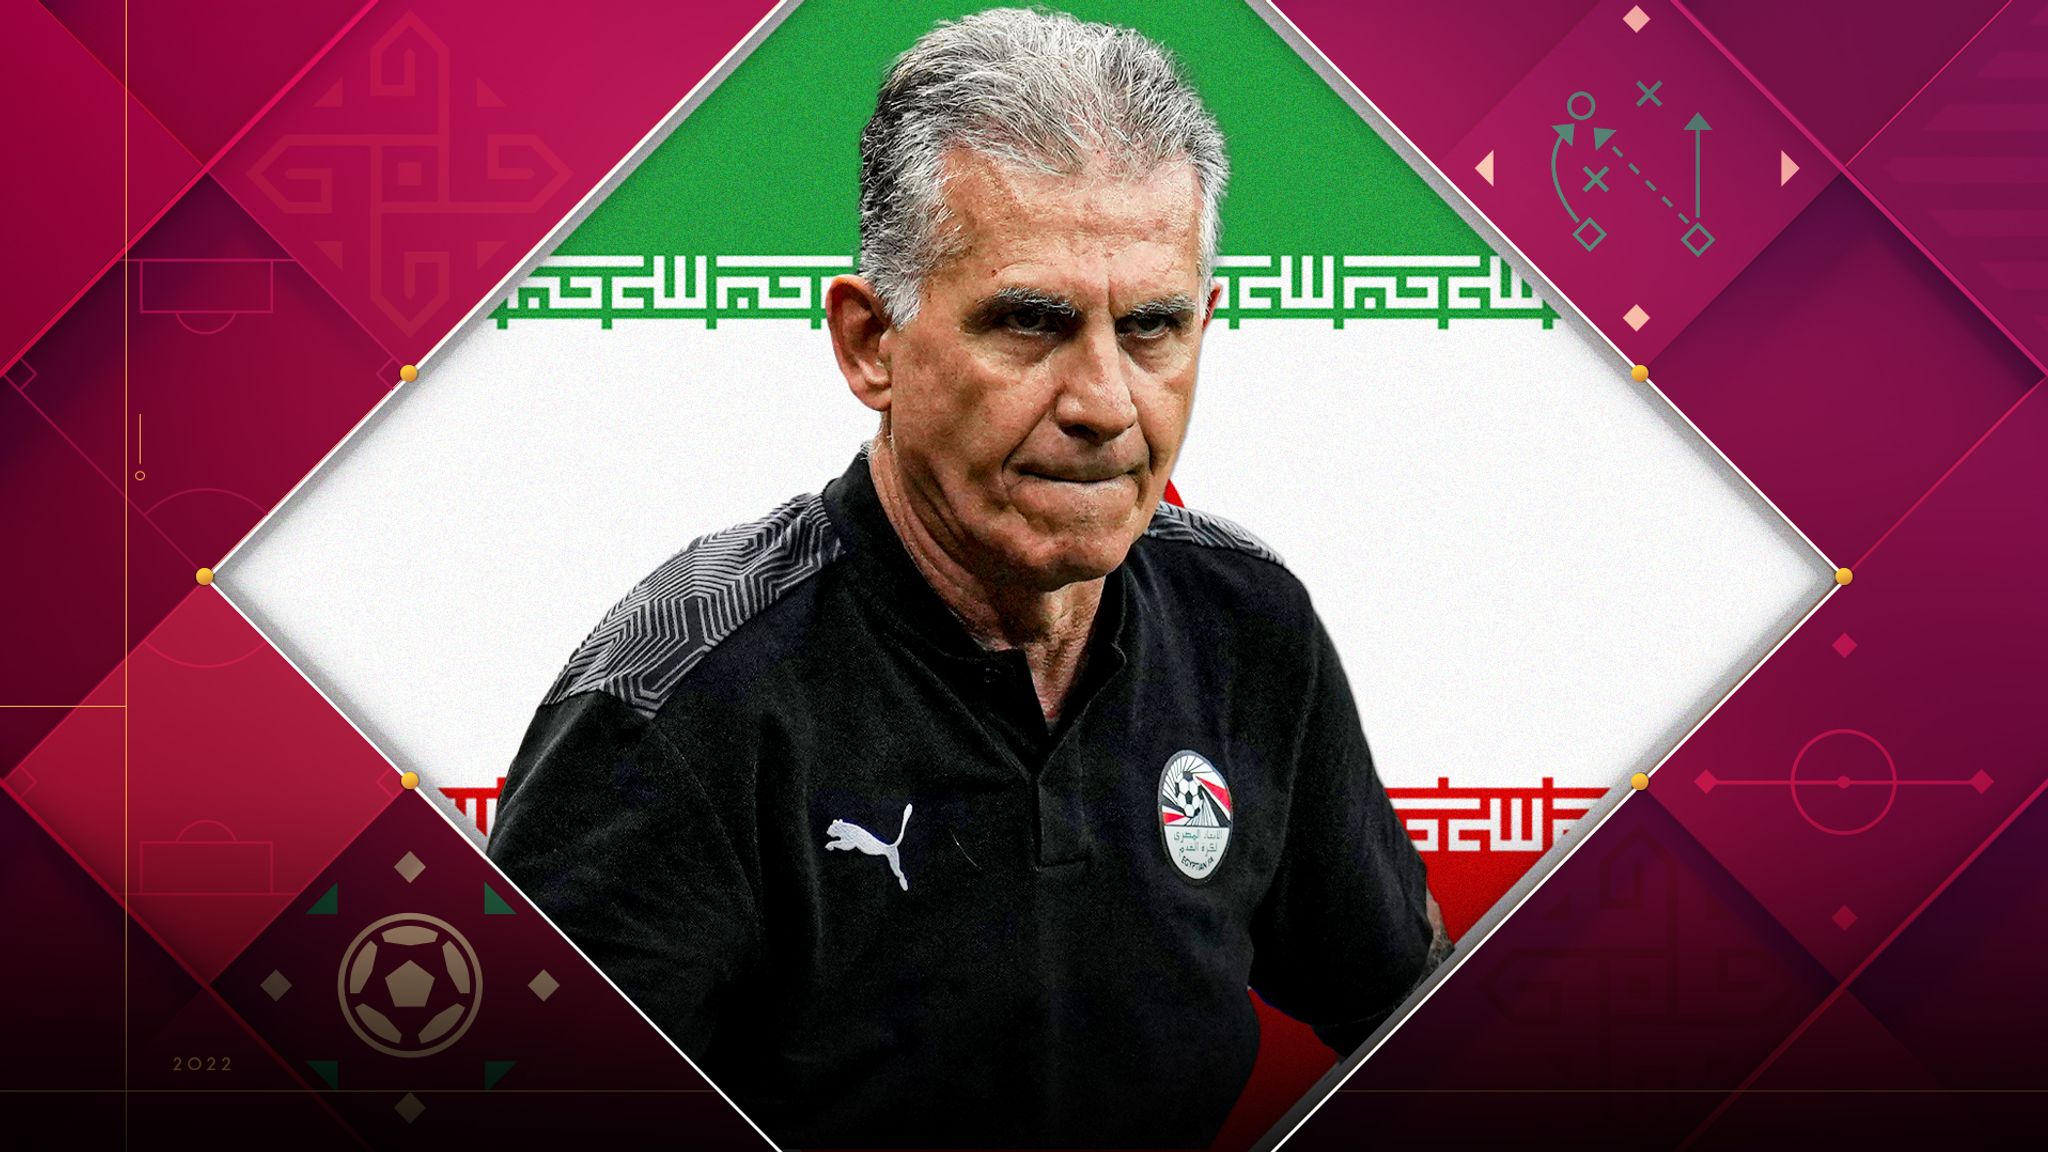 Iran Professional League new season to kick off on Thursday - Tehran Times